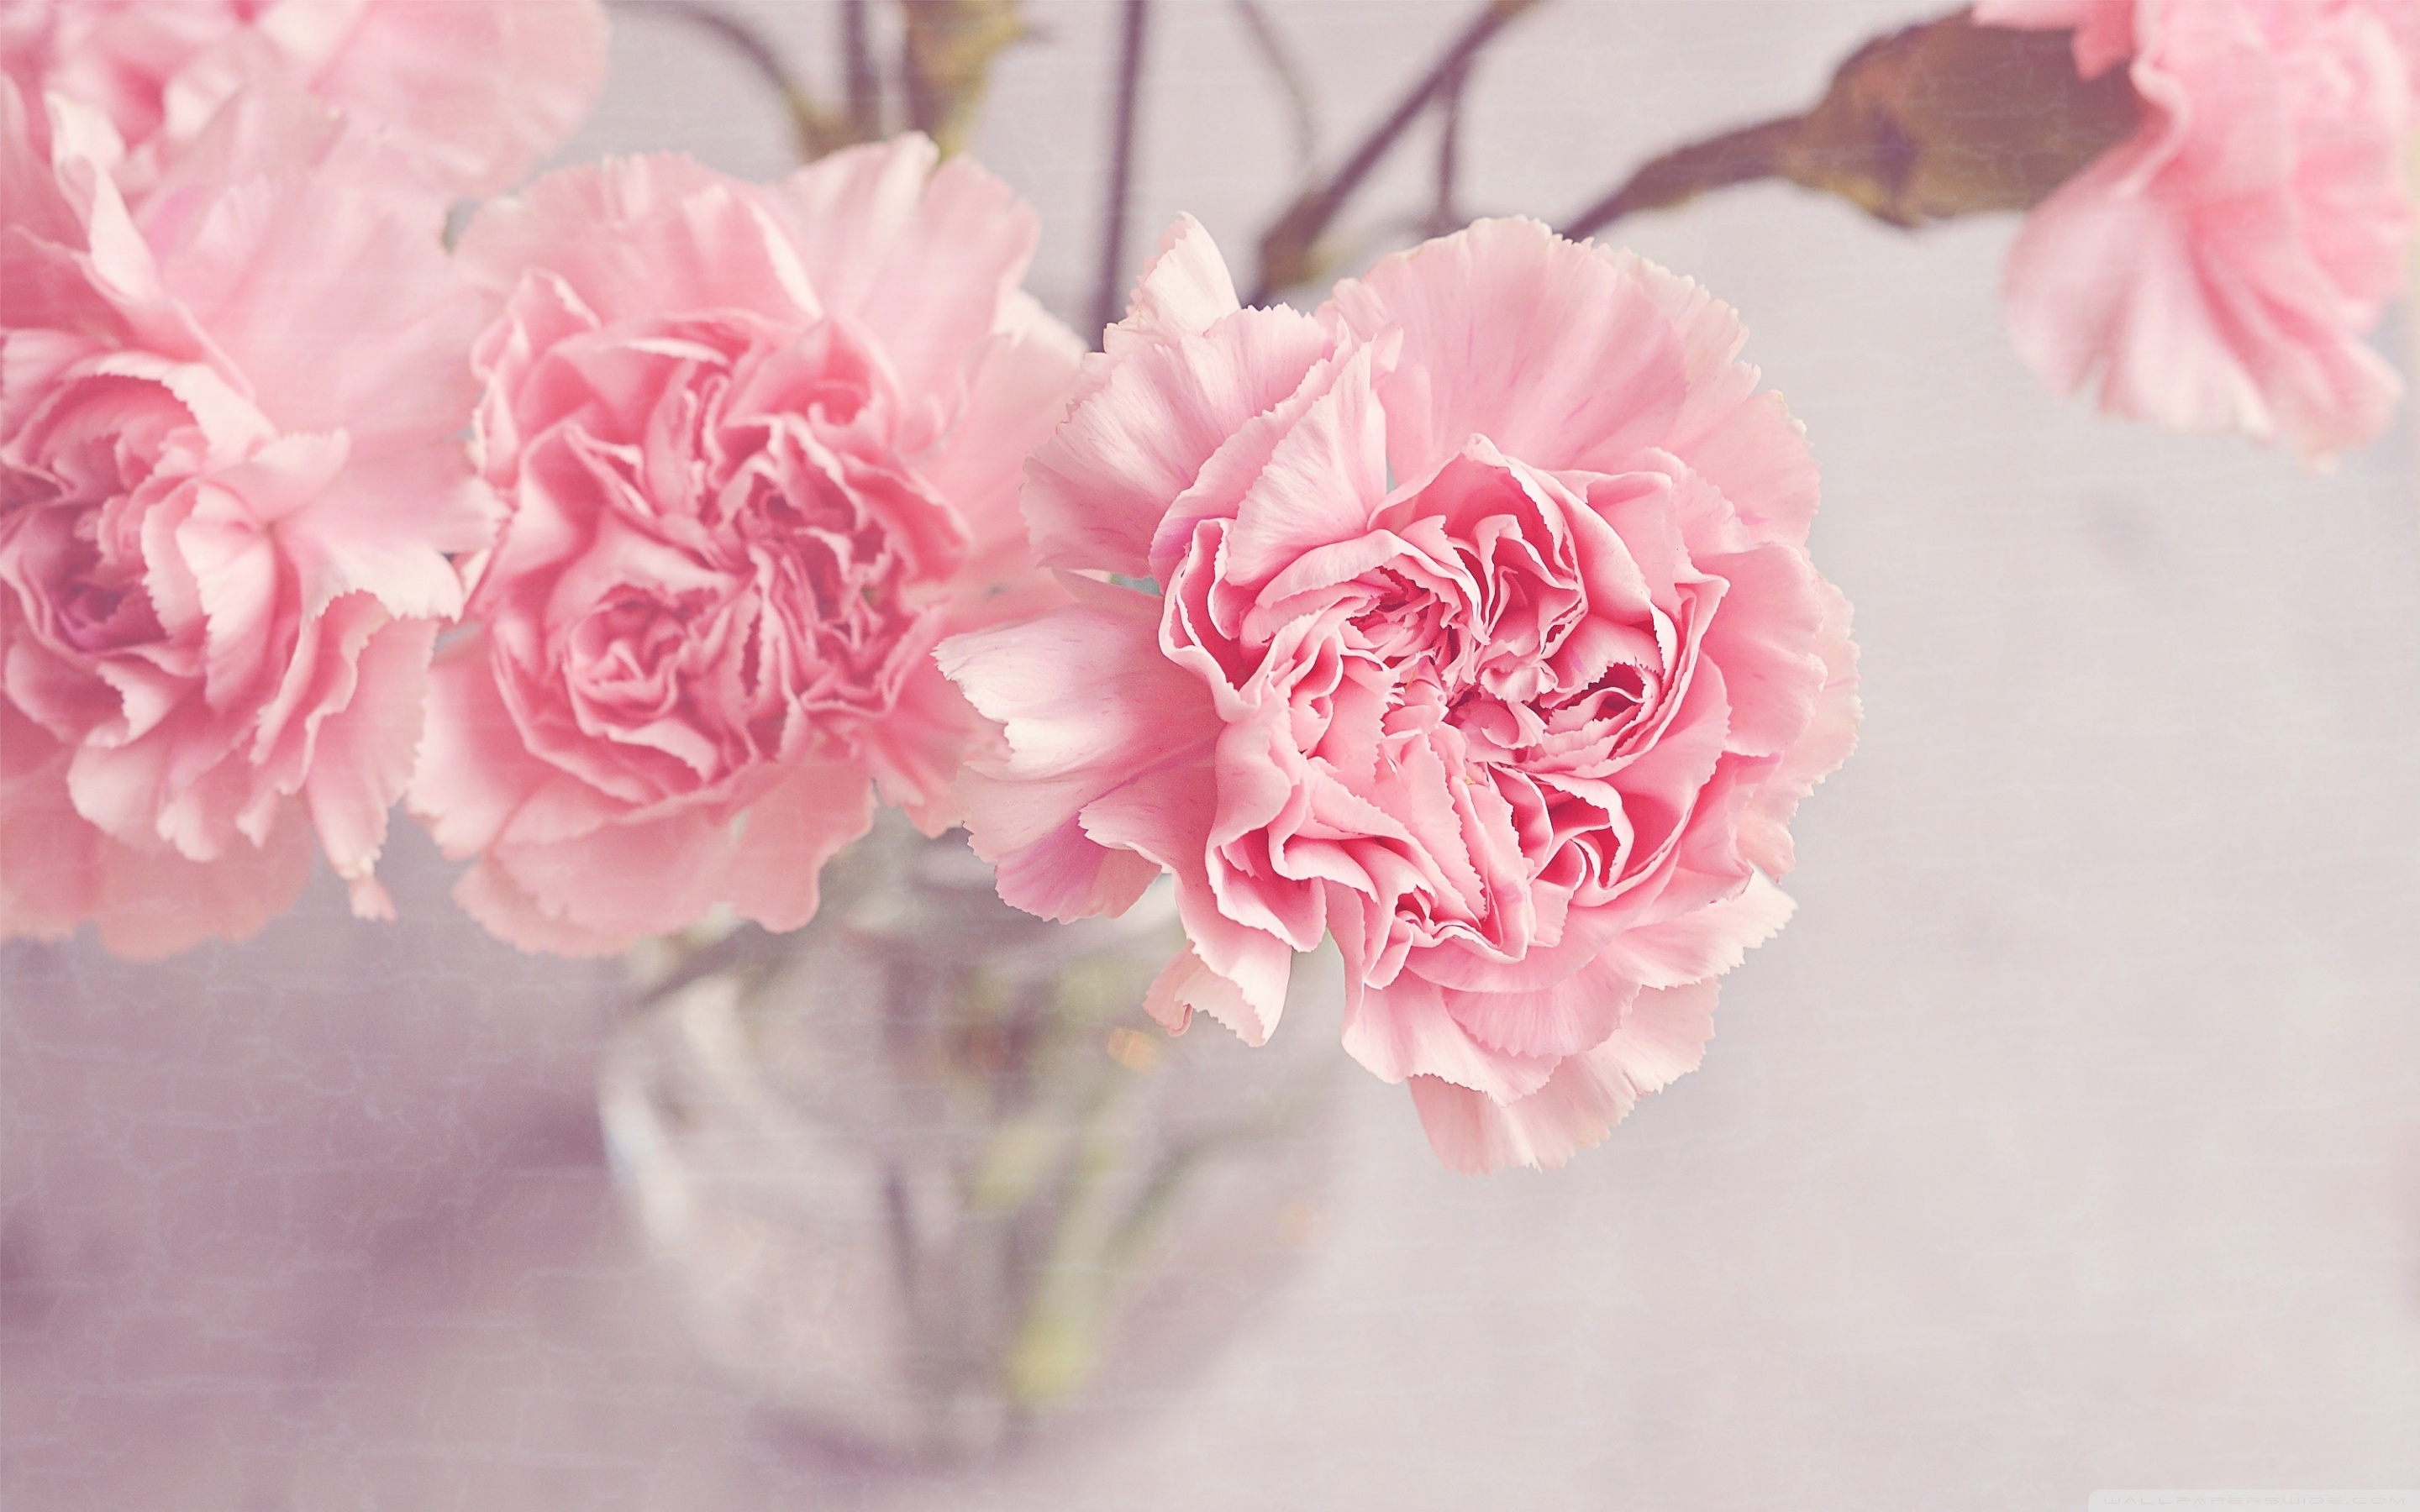 Light Pink Carnations Flowers in a Vase Ultra HD Desktop Background  Wallpaper for 4K UHD TV : Widescreen & UltraWide Desktop & Laptop : Multi  Display, Dual Monitor : Tablet : Smartphone